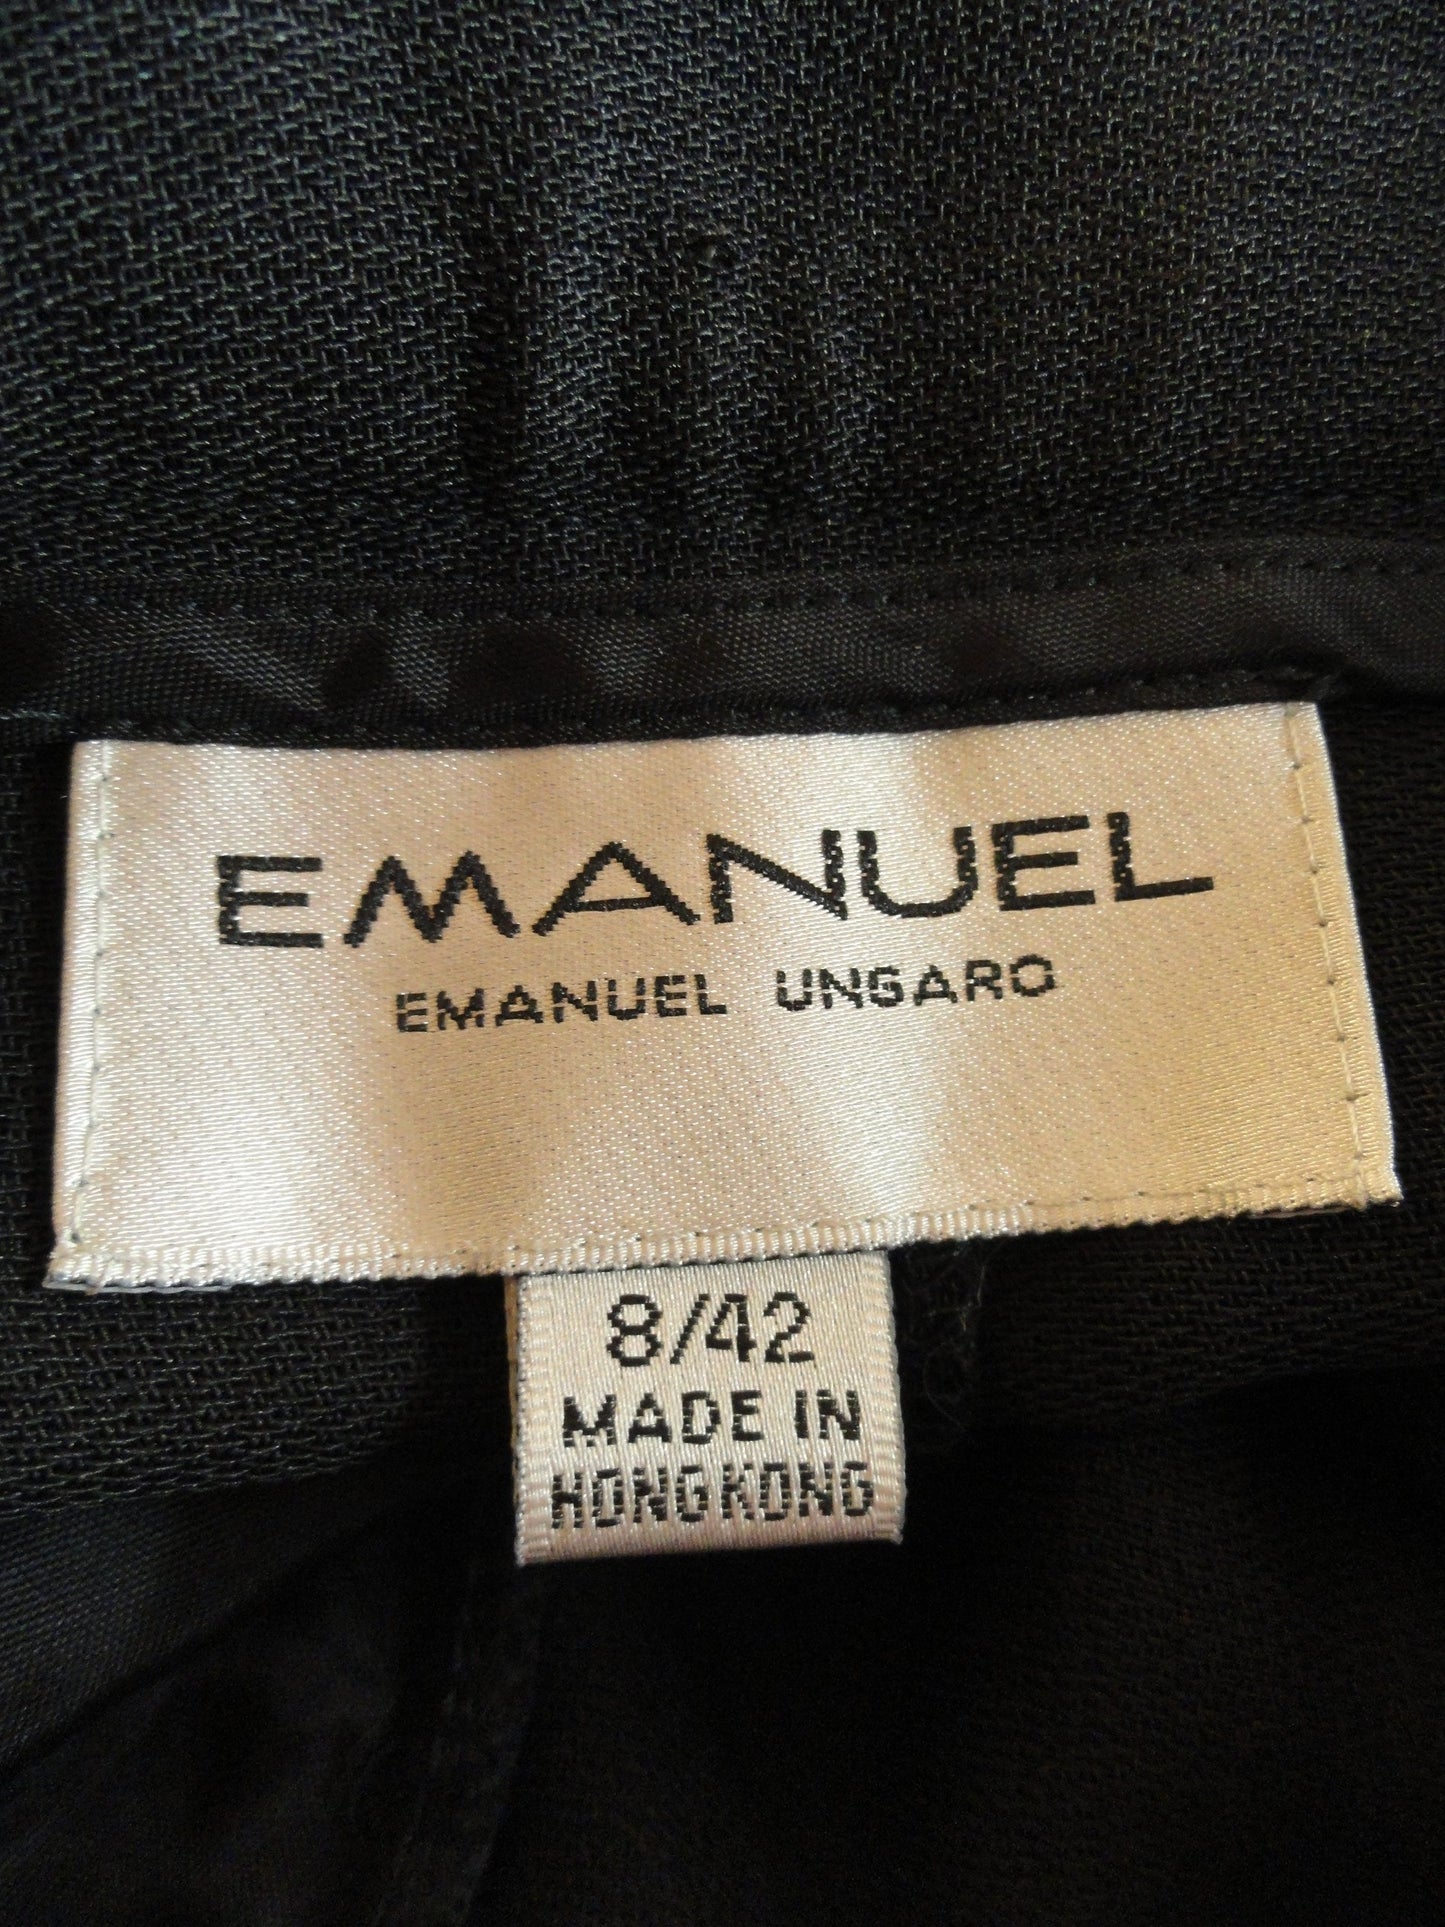 Load image into Gallery viewer, Emanuel Ungaro Lightweight Black Pants Size 8 (SKU 000056)
